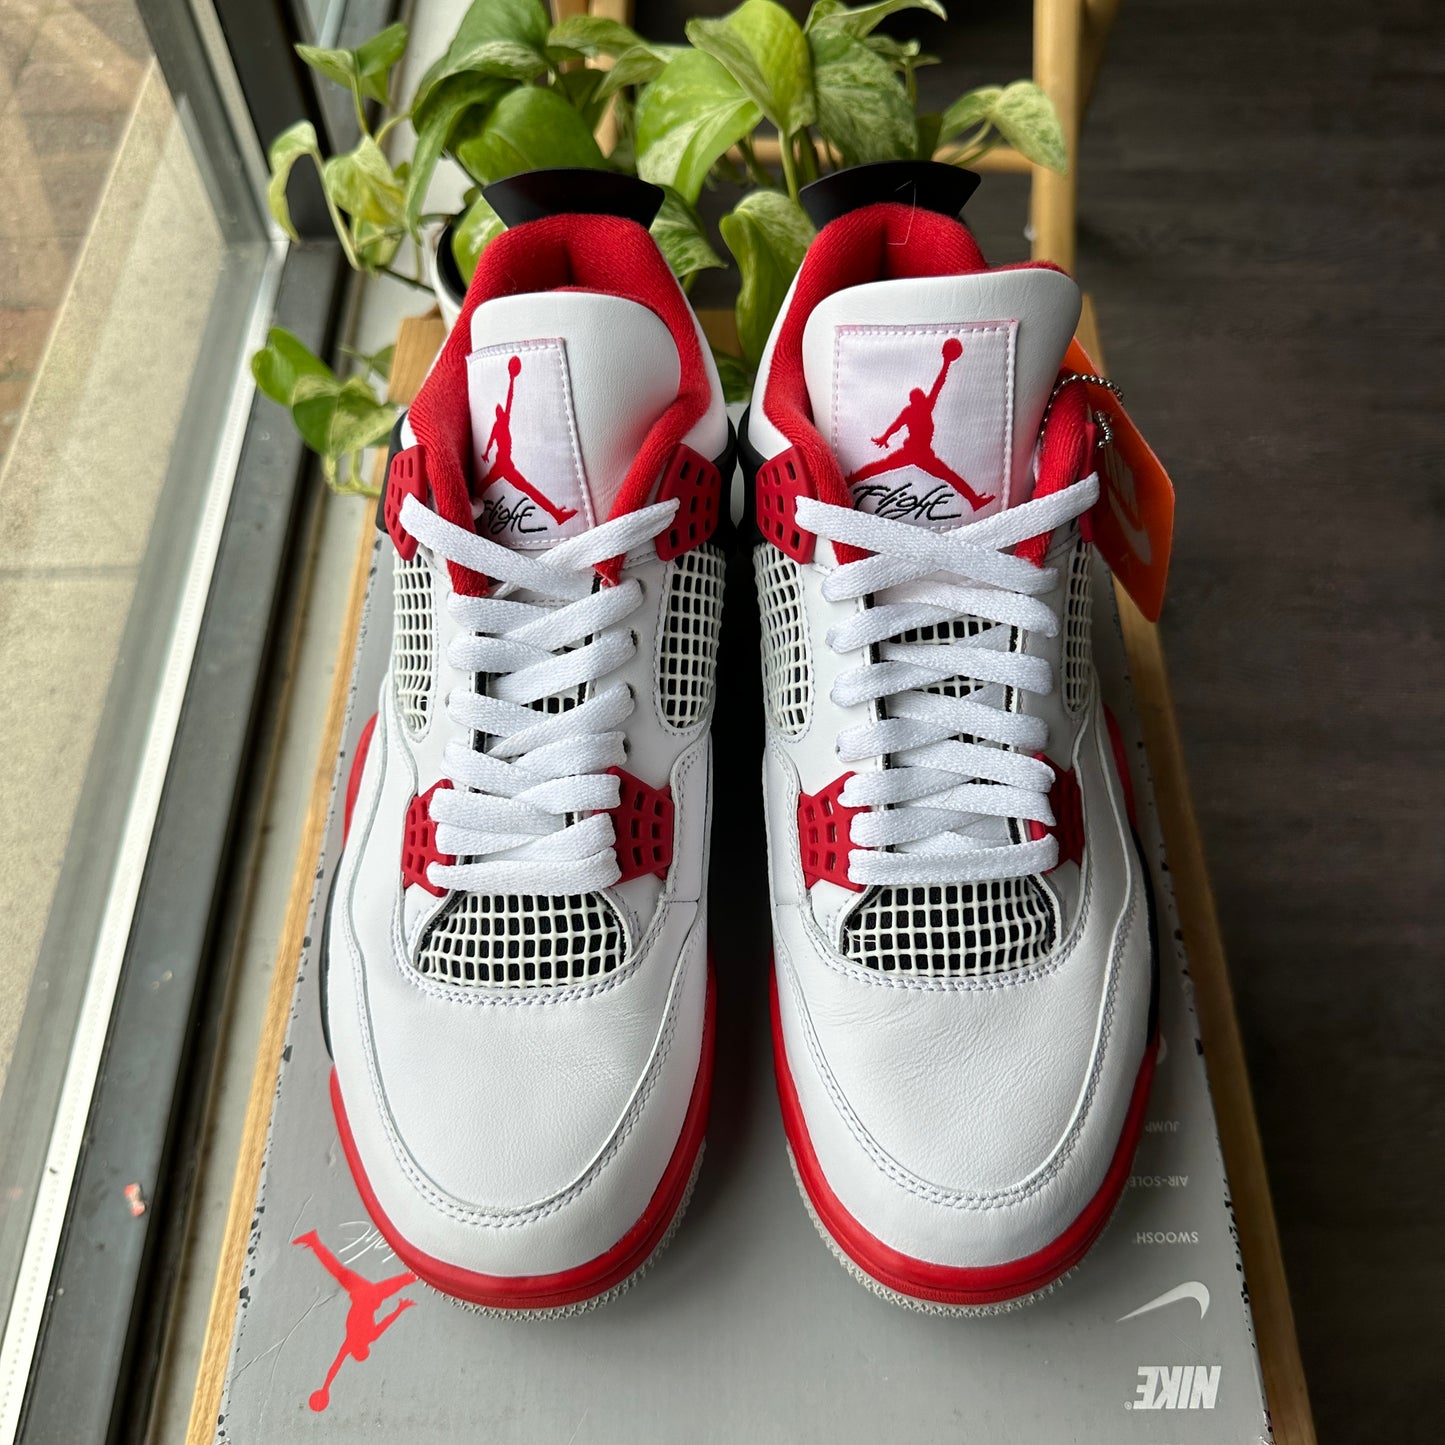 Brand New Air Jordan 4 "Fire Red" Size 9.5